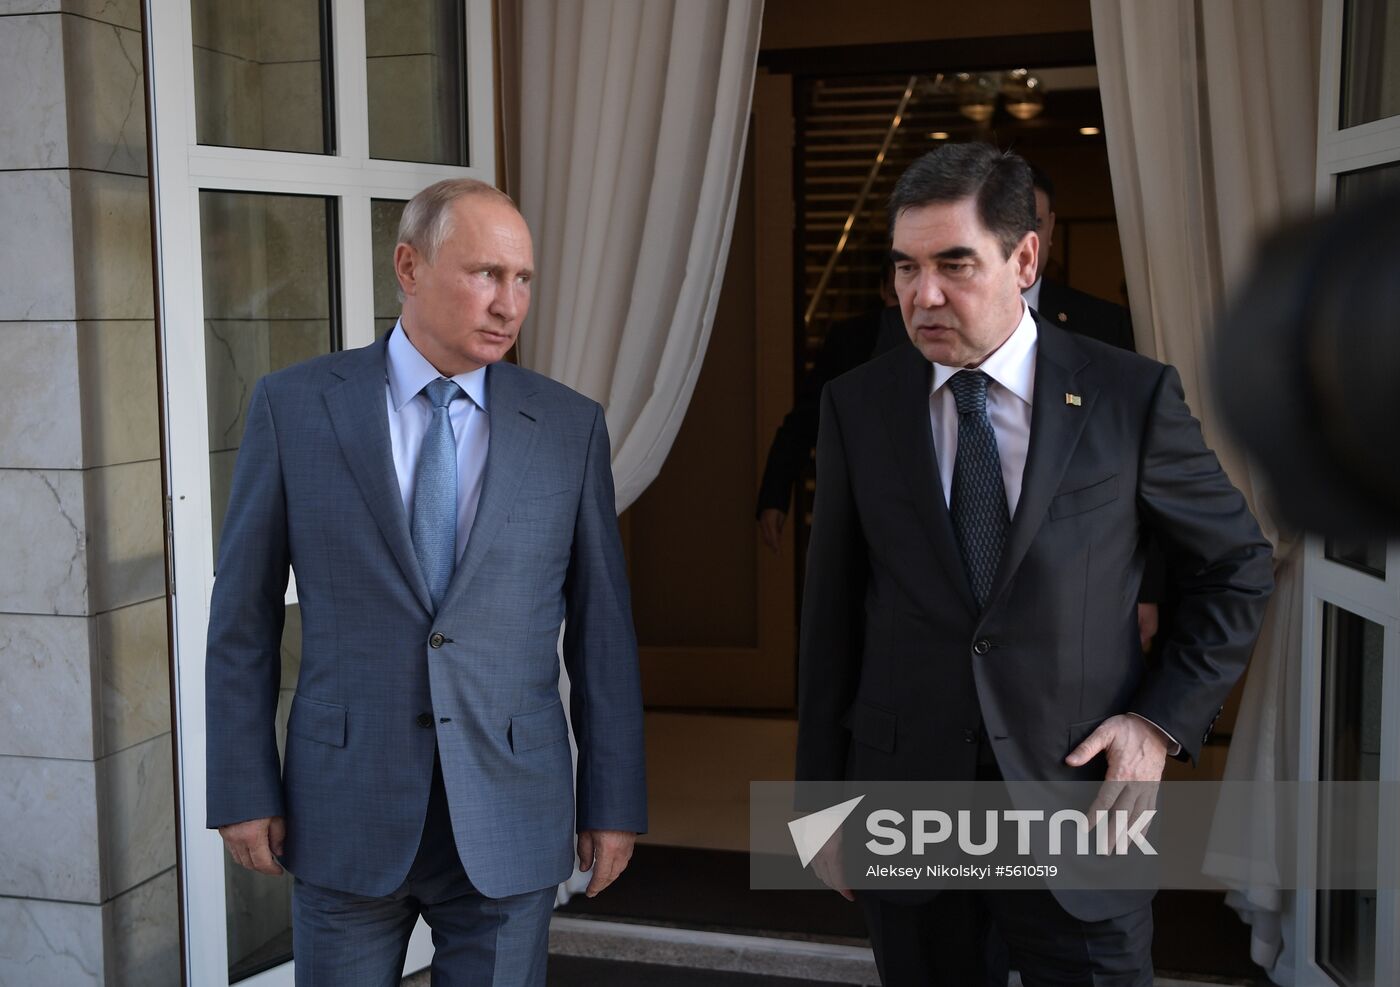 Russian President Vladimir Putin meets with President of Turkmenistan Gurbanguly Berdimuhamedov